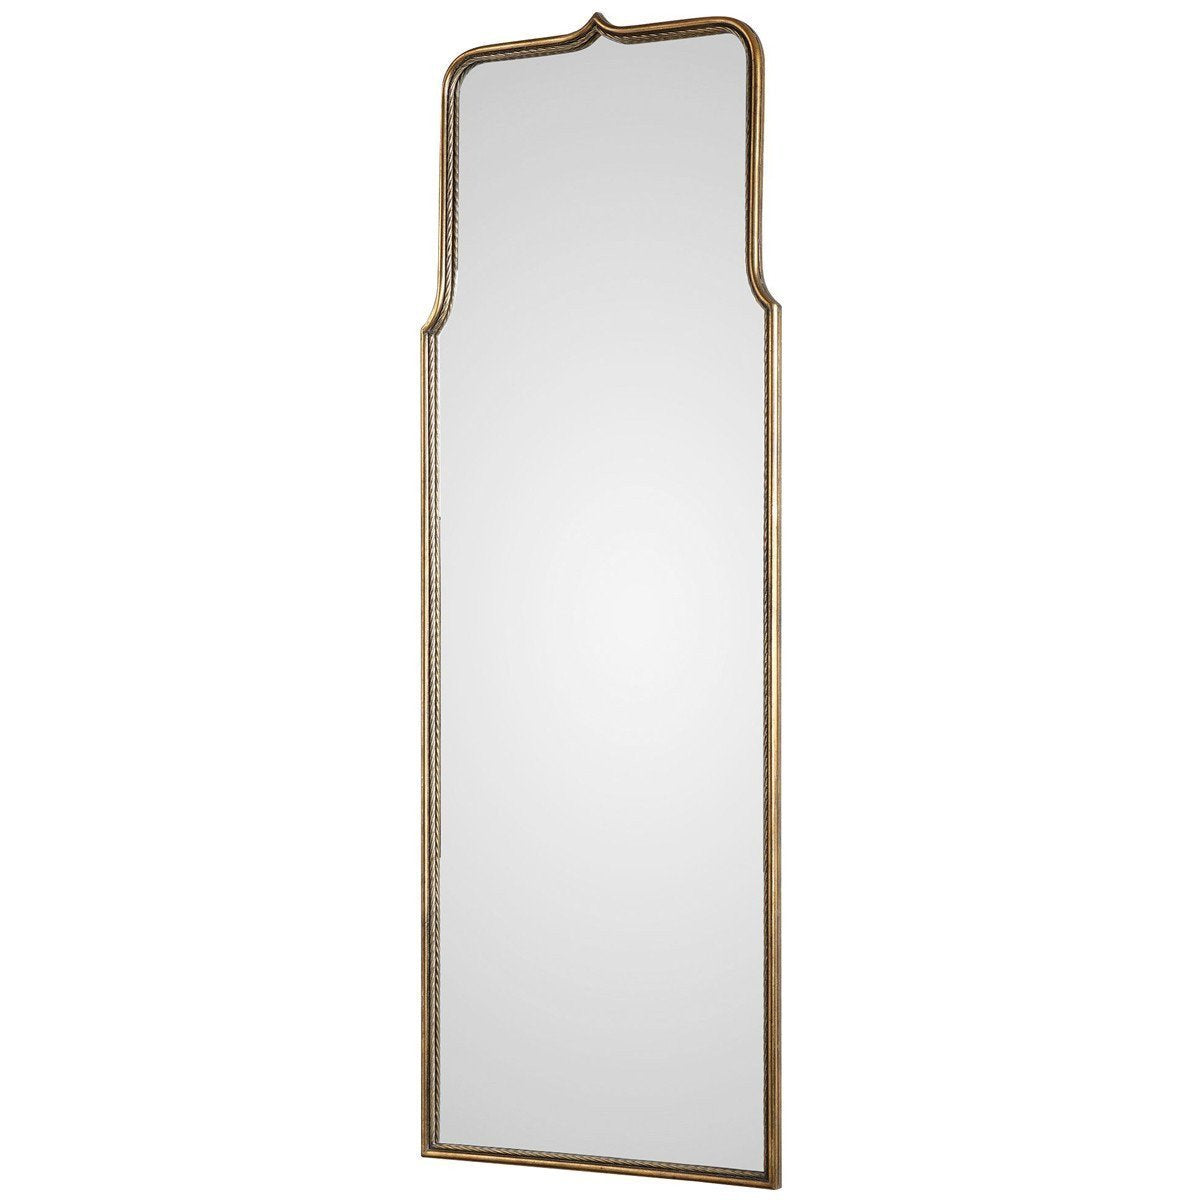 Uttermost Adelasia Antiqued Gold Mirror